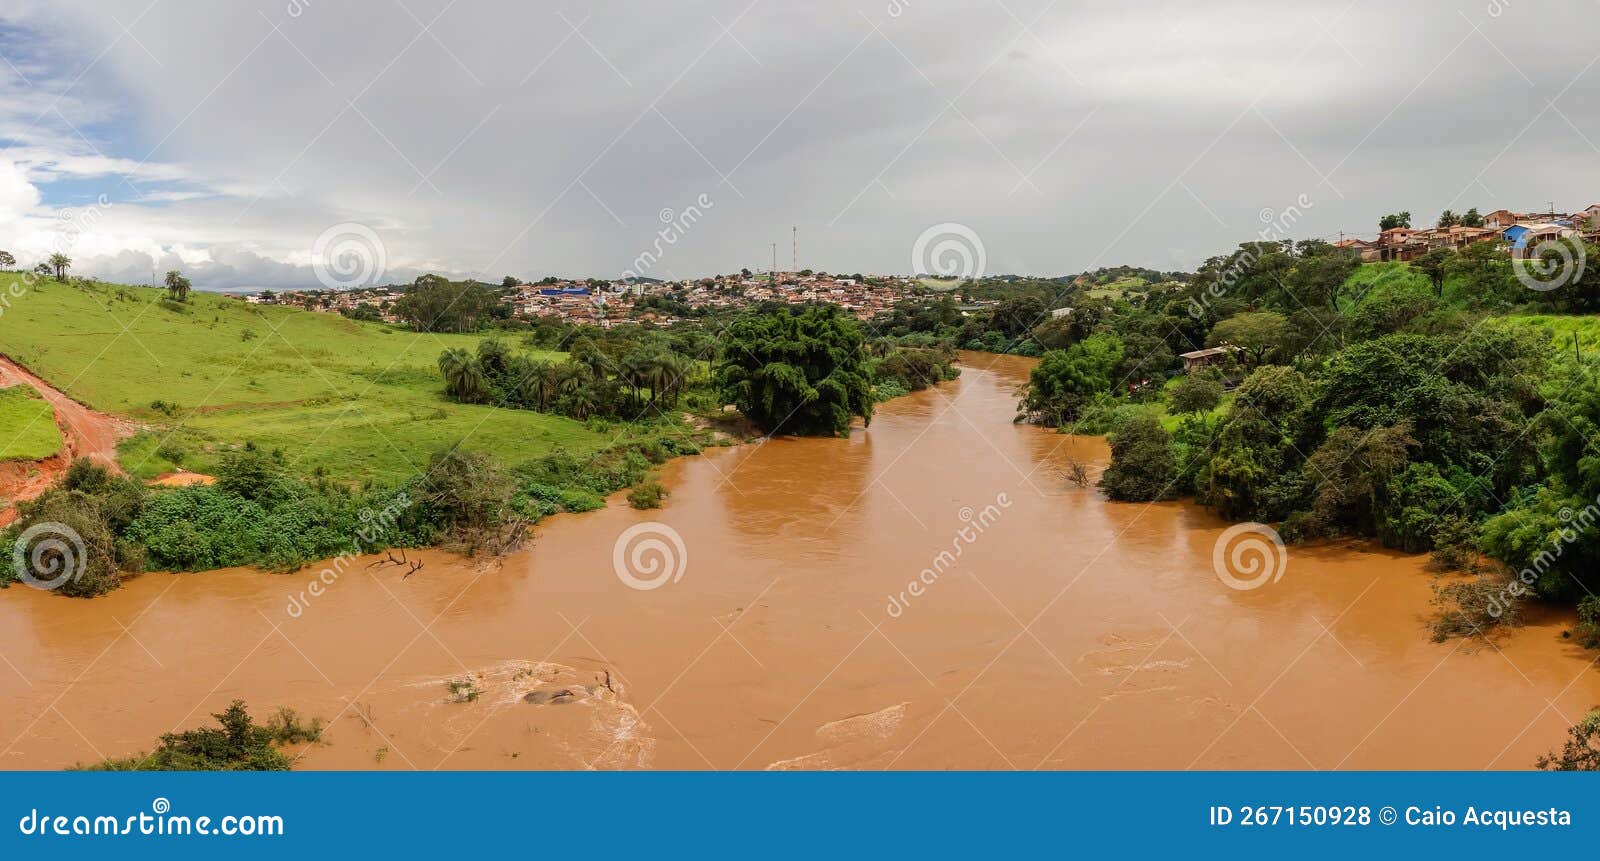 Paraopeba River Overflowing after Summer Rains in Brumadinho